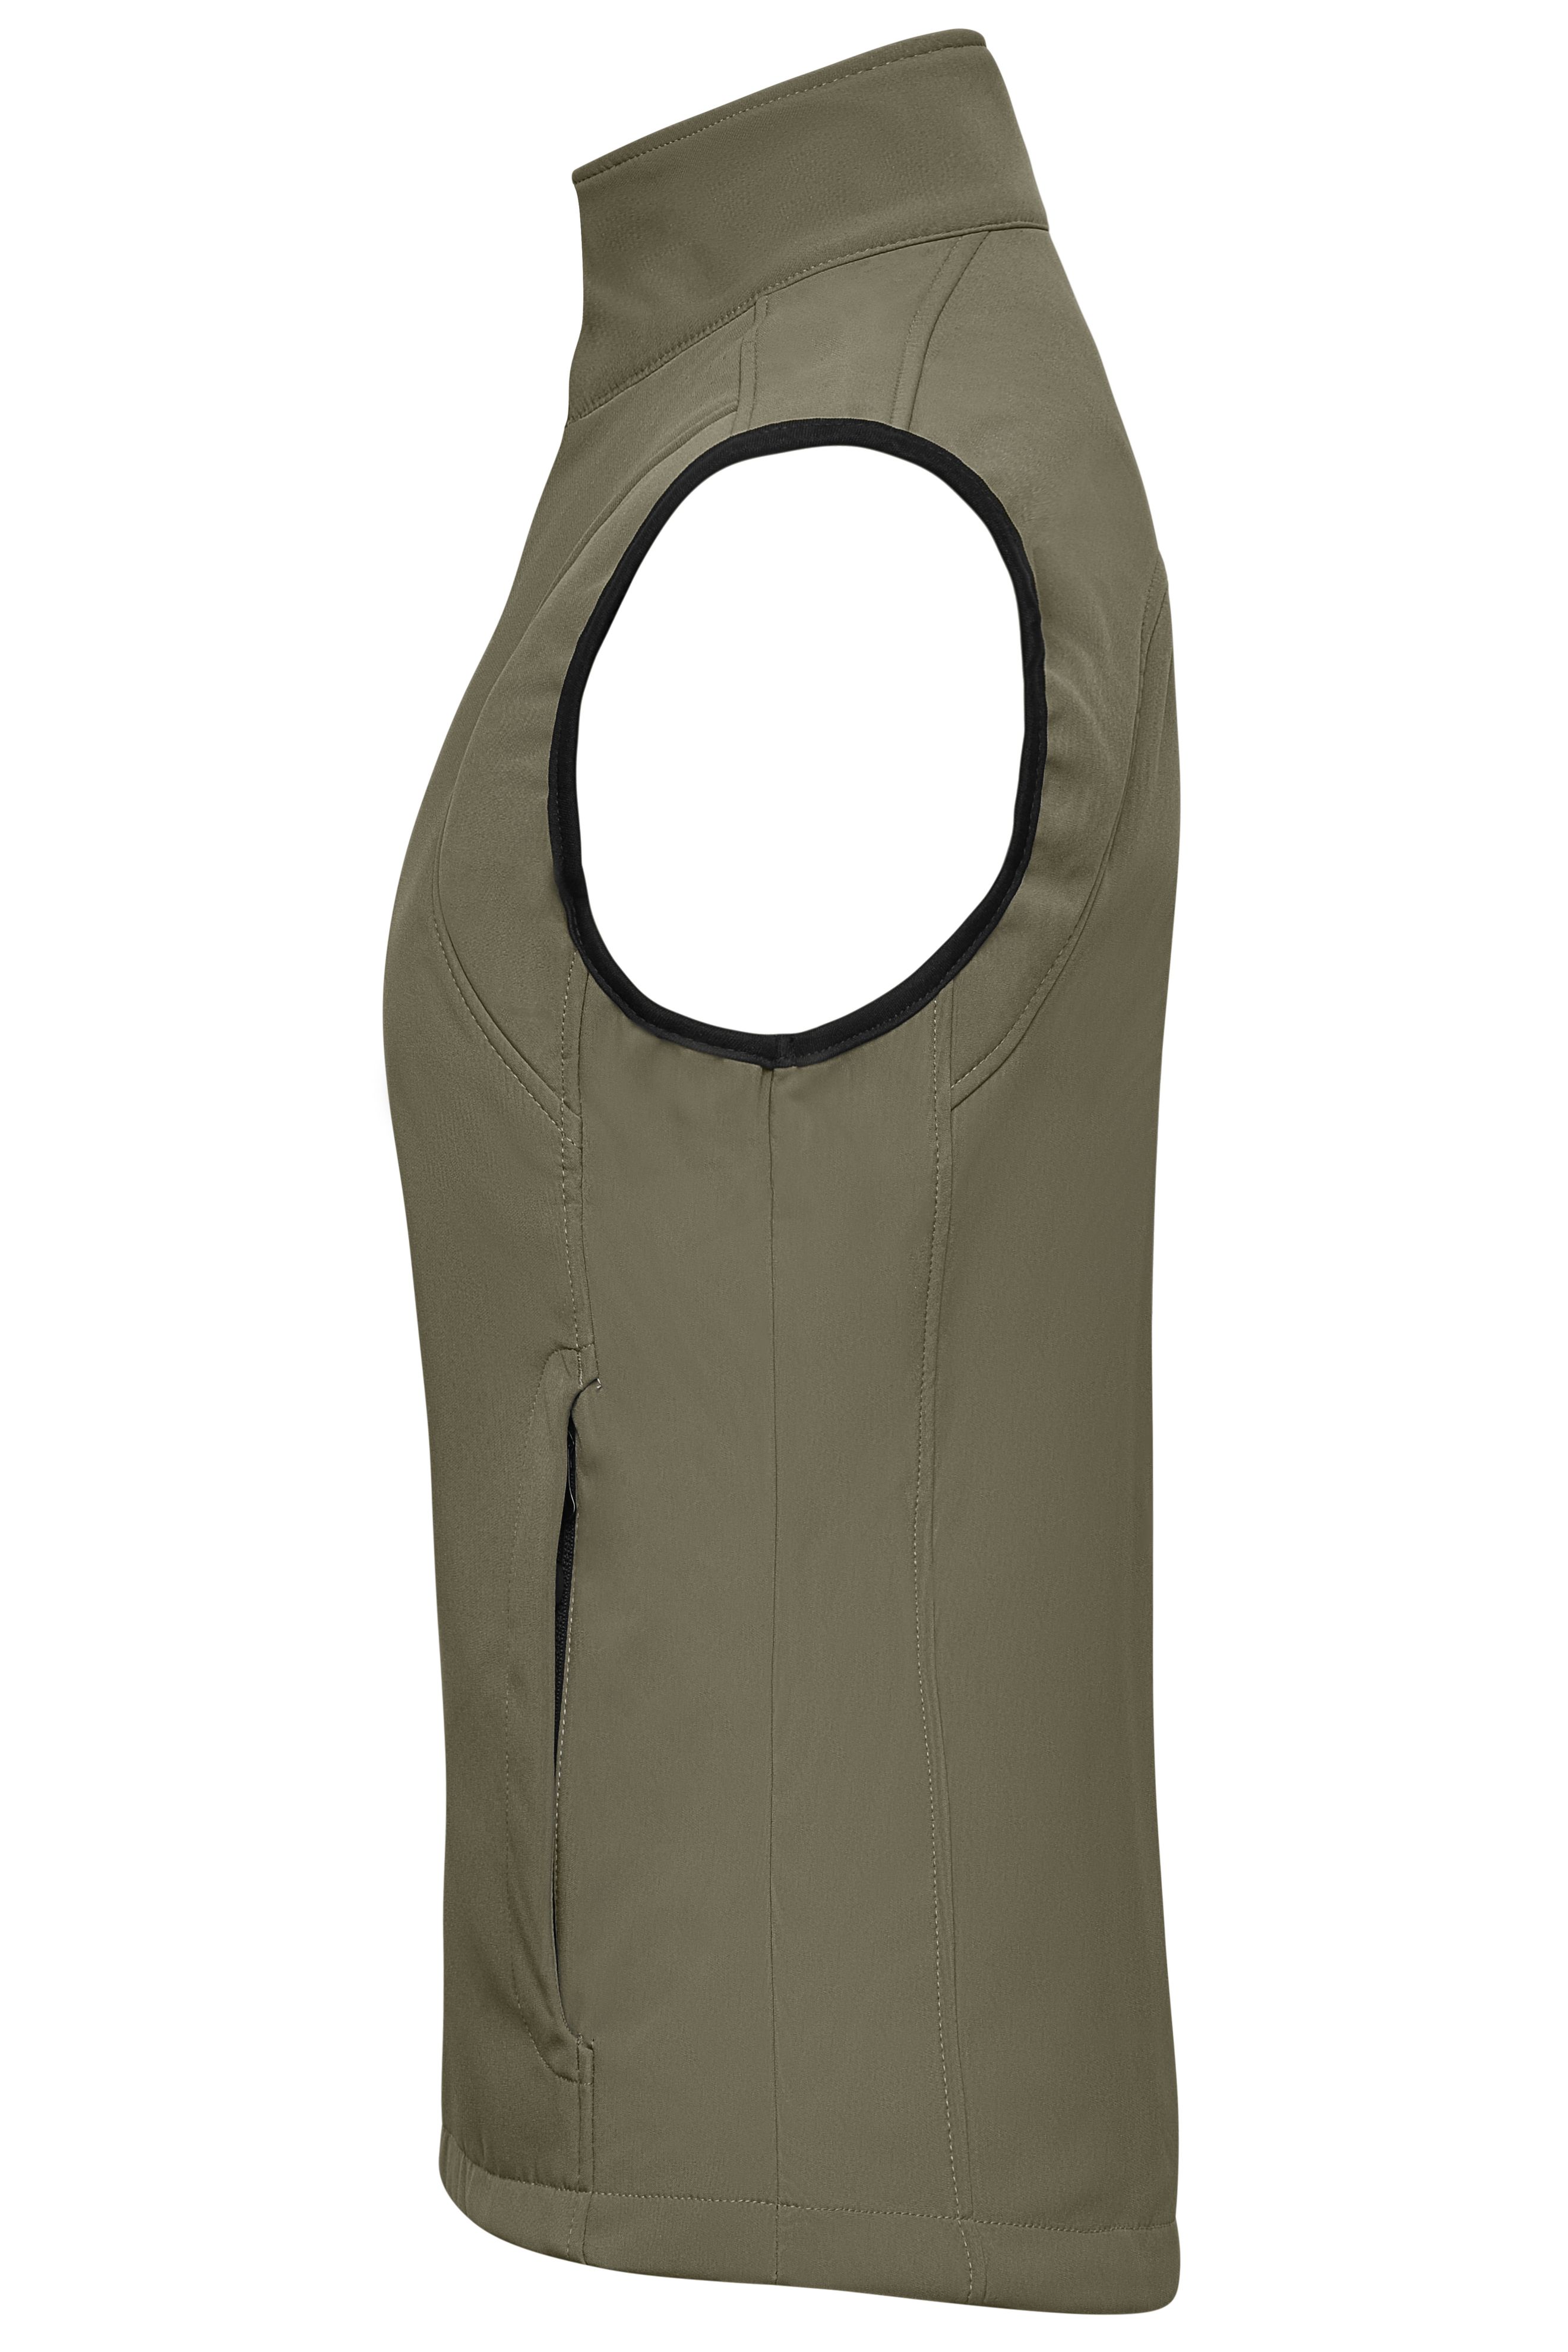 Ladies' Softshell Vest JN138 Trendige Weste aus Softshell